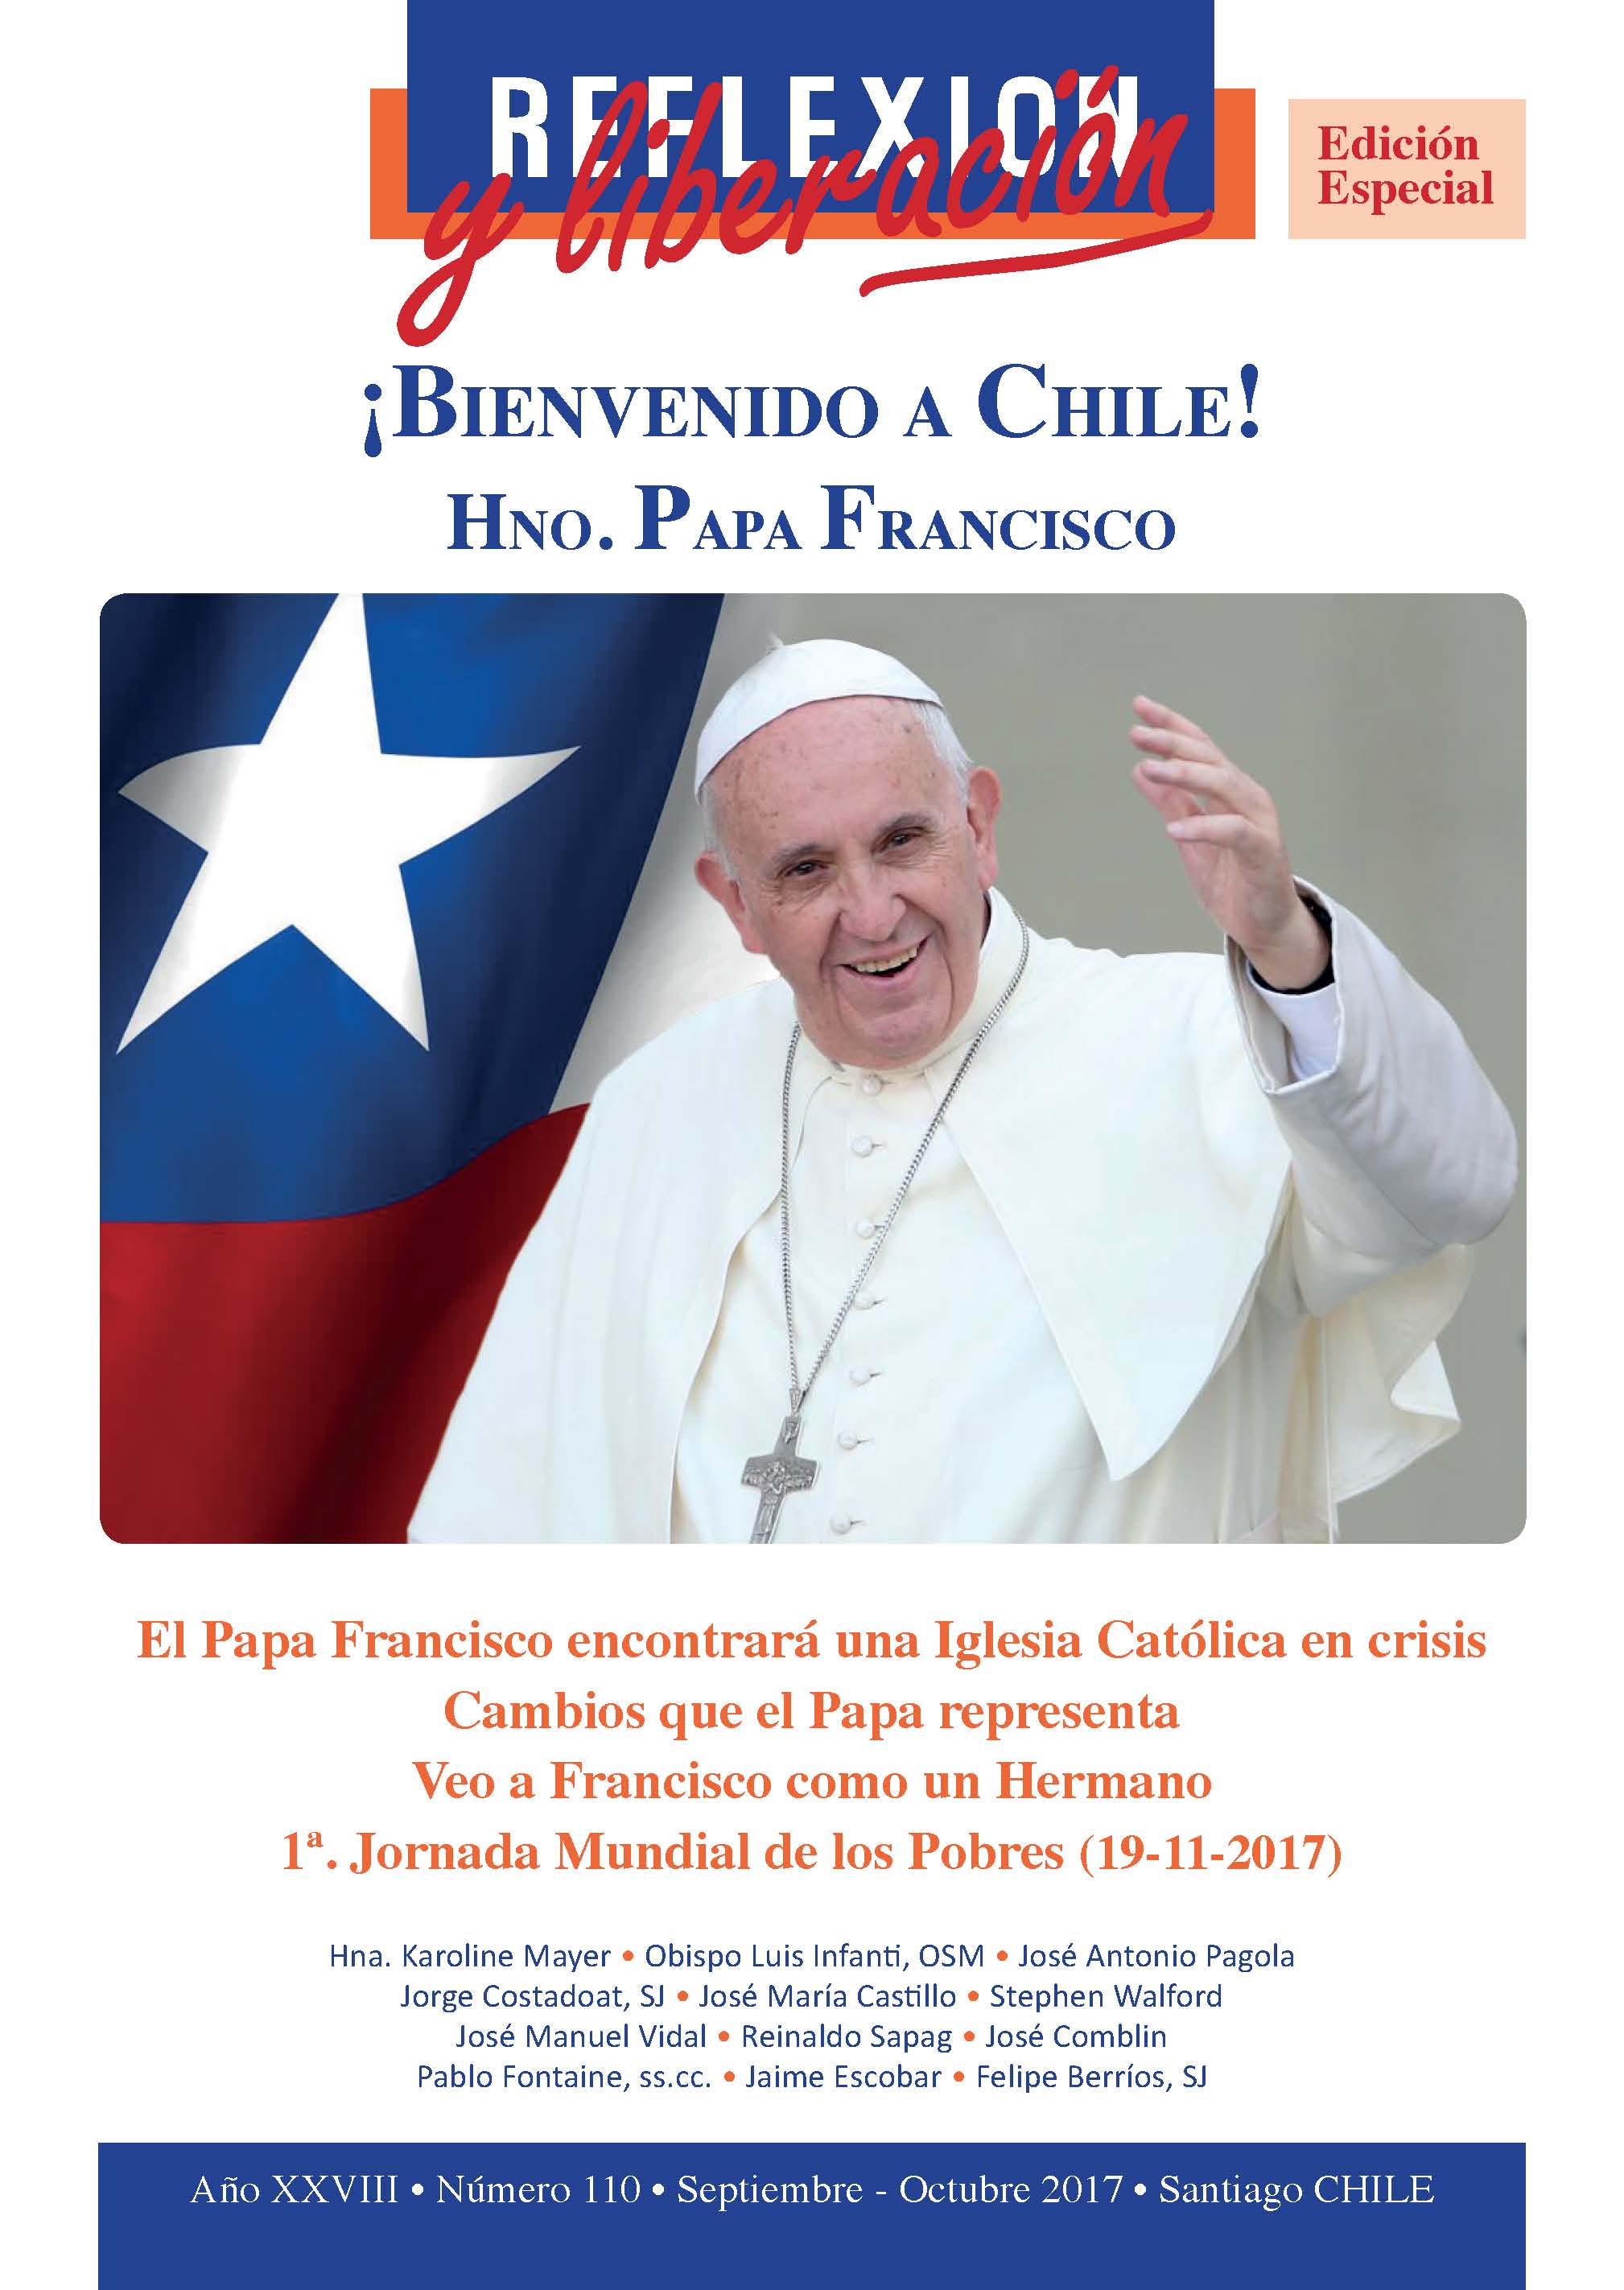  ¡Bienvenido a Chile! Hno. Papa Francisco